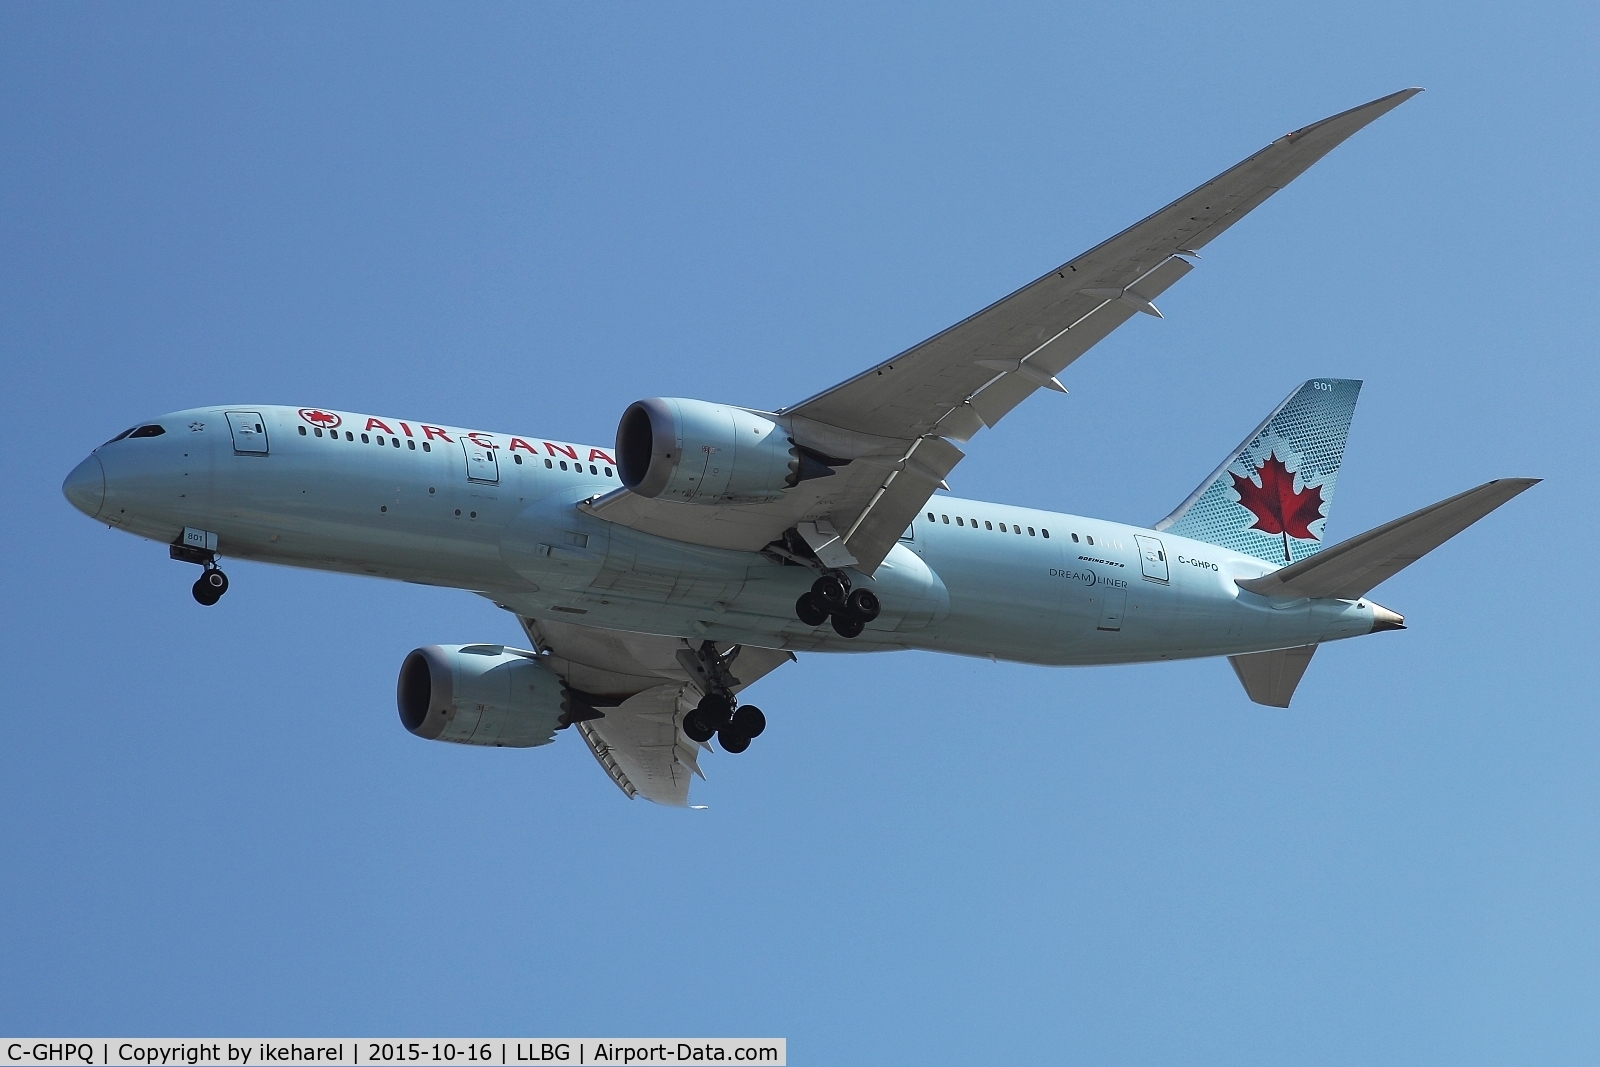 C-GHPQ, 2014 Boeing 787-8 Dreamliner C/N 35257, Flight from Toronto, Canada, landing on runway 30.